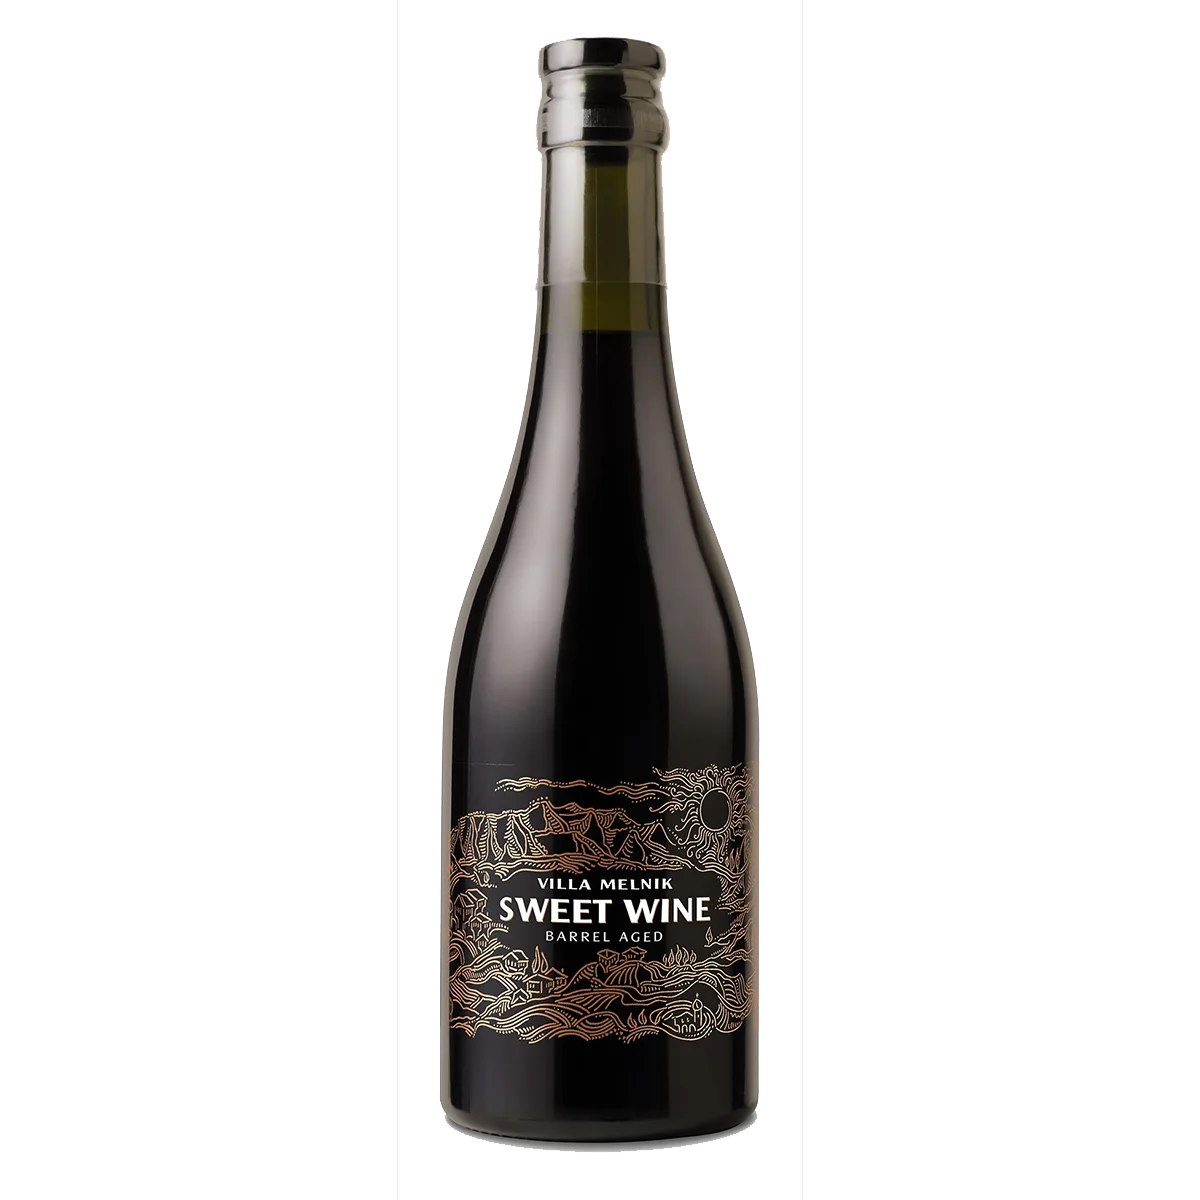 Sweet Vine Barrel Aged 2018 - Rotwein süß aus Bulgarien - Villa Melnik